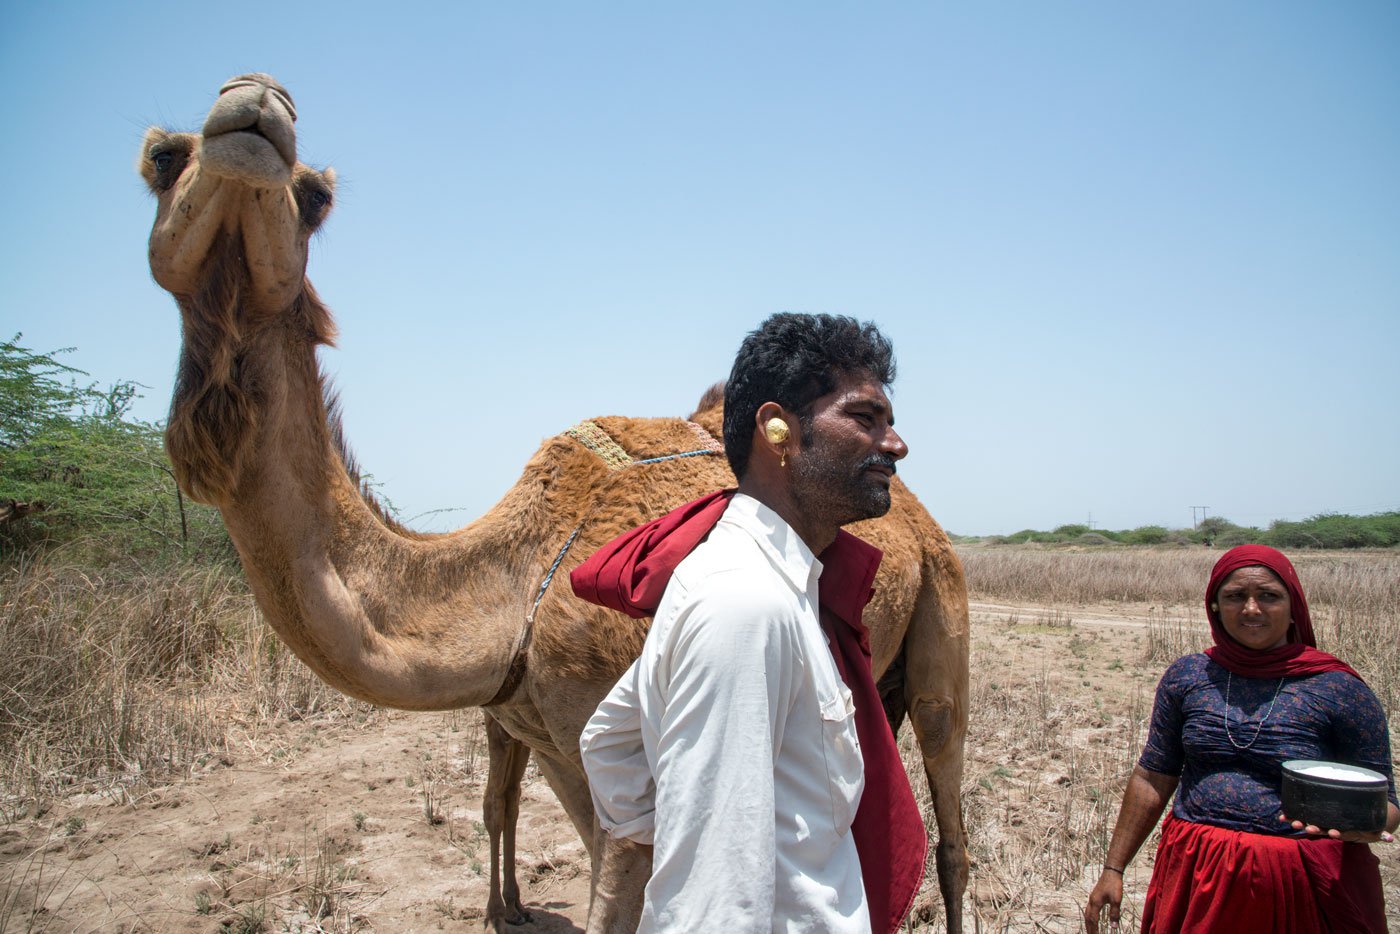 Jagabhai Rabari and his wife Jiviben Khambhala own 60 camels in Beh village of Khambaliya taluka, Devbhumi Dwarka district. ‘My livelihood depends on them. If they are happy and healthy, so am I,’ Jagabhai says